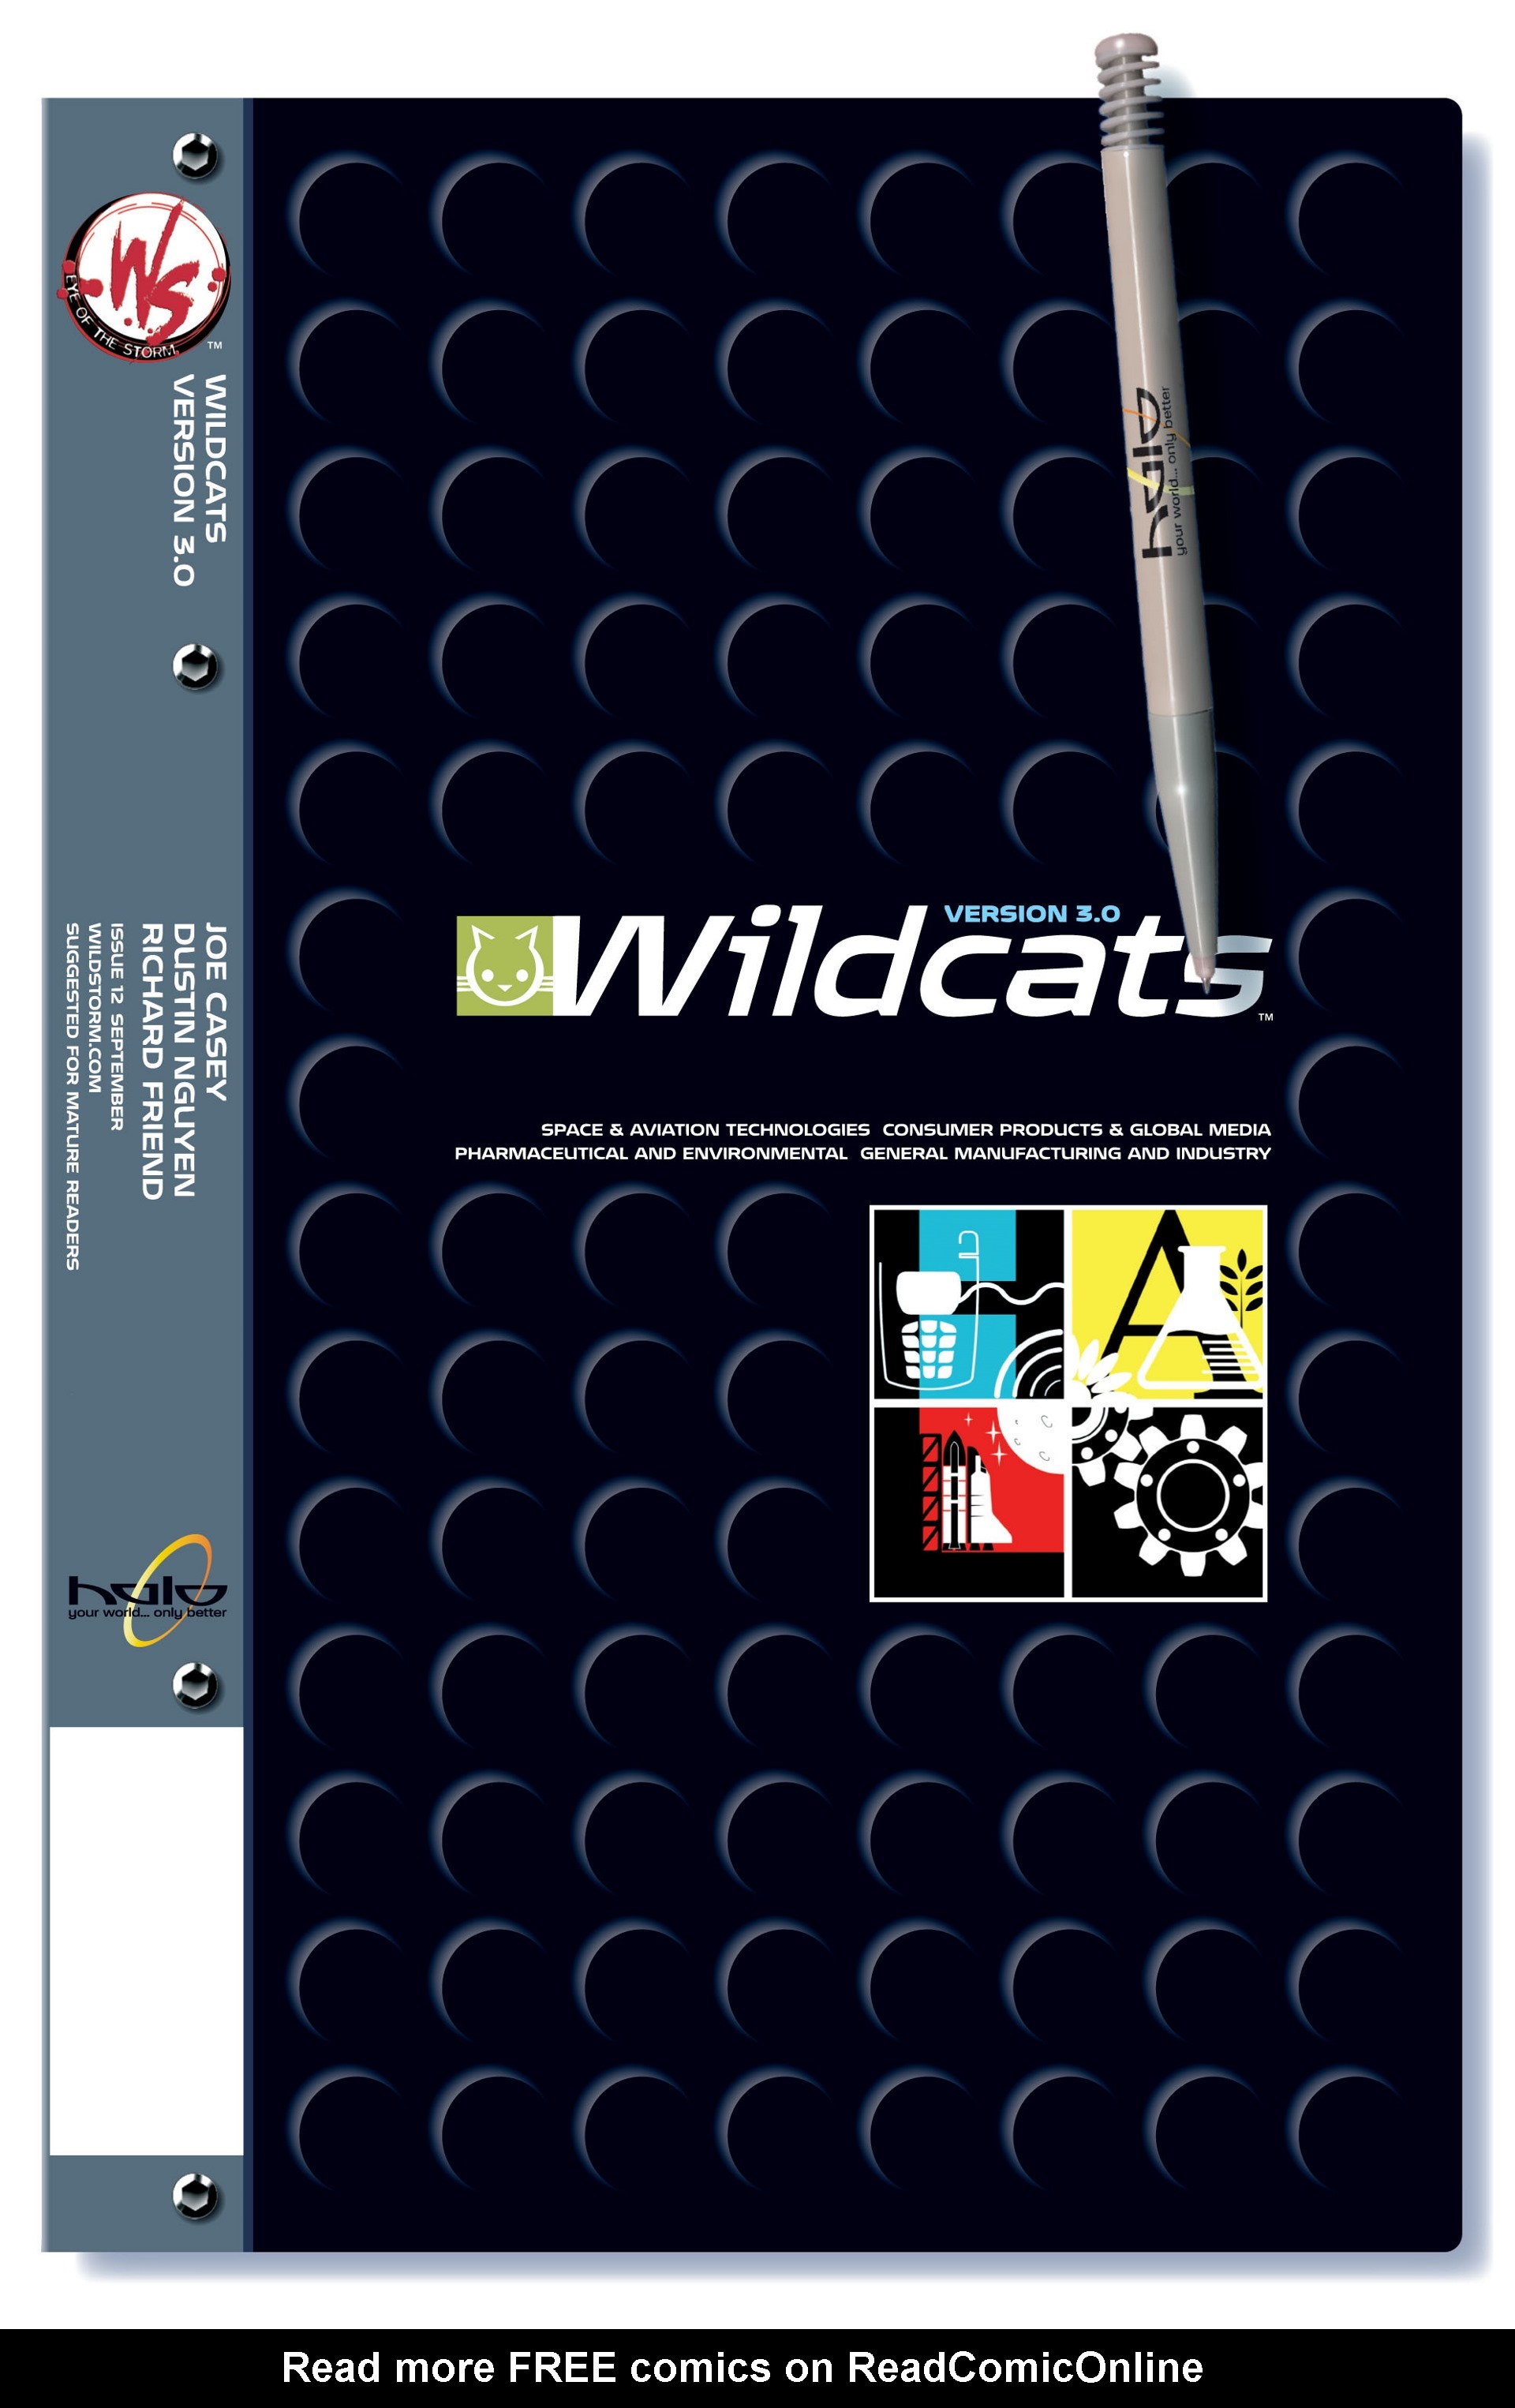 Read online Wildcats Version 3.0 comic -  Issue #12 - 1